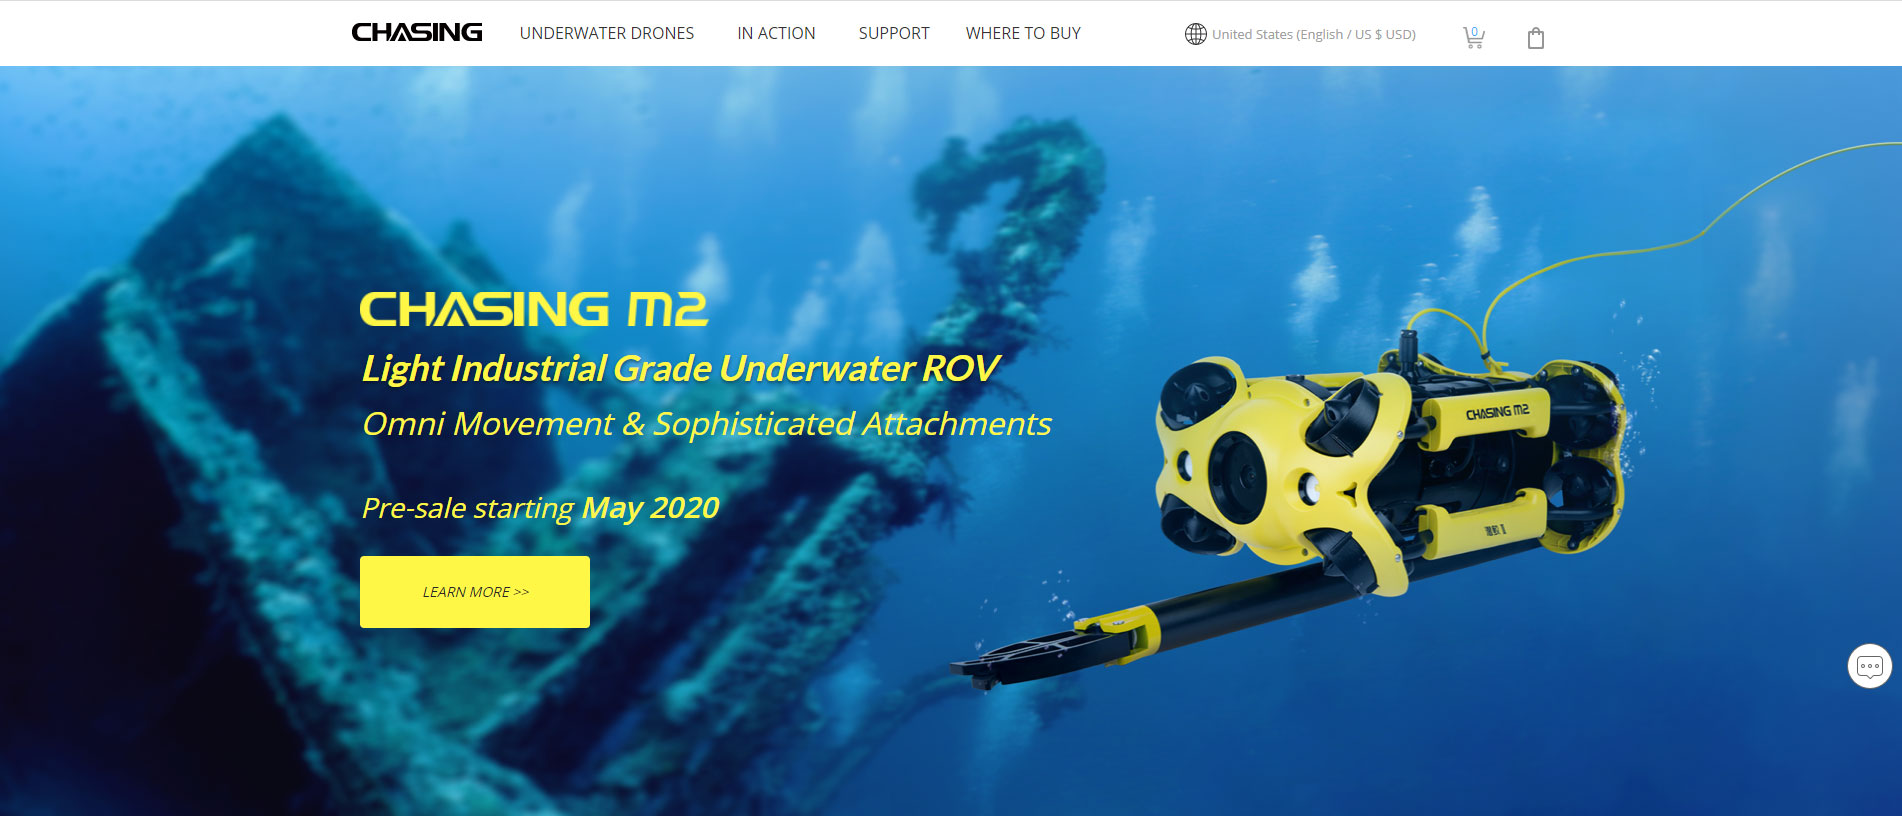 chasing-m2-rov-underwater-drone.jpg